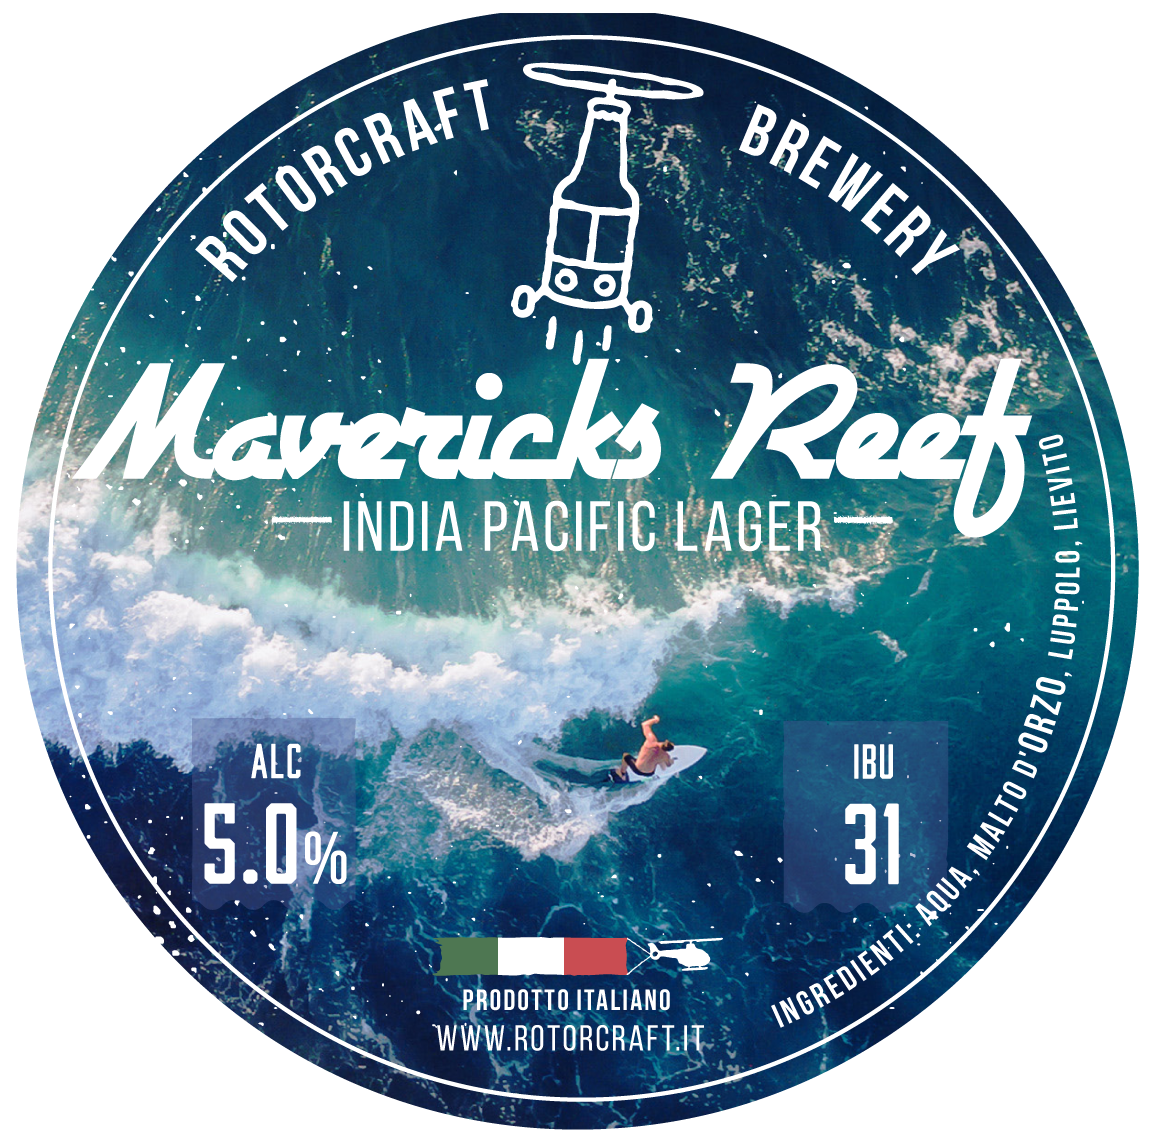 Mavericks Reef - India Pacific Lager, Fusto 30L